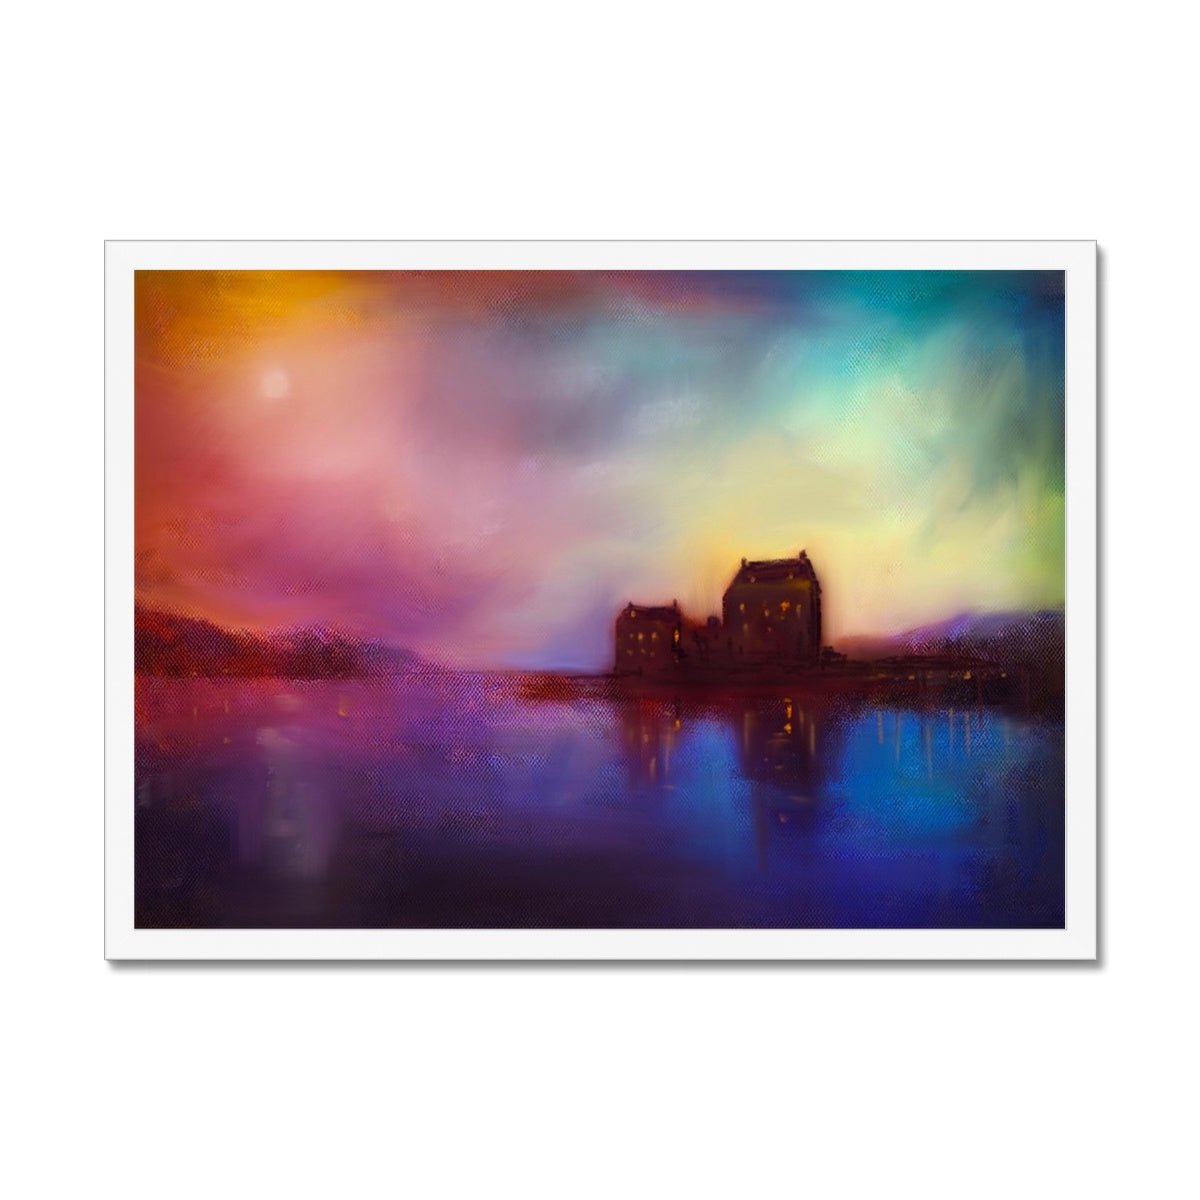 Eilean Donan Castle Sunset Painting | Framed Prints From Scotland-Framed Prints-Scottish Castles Art Gallery-A2 Landscape-White Frame-Paintings, Prints, Homeware, Art Gifts From Scotland By Scottish Artist Kevin Hunter